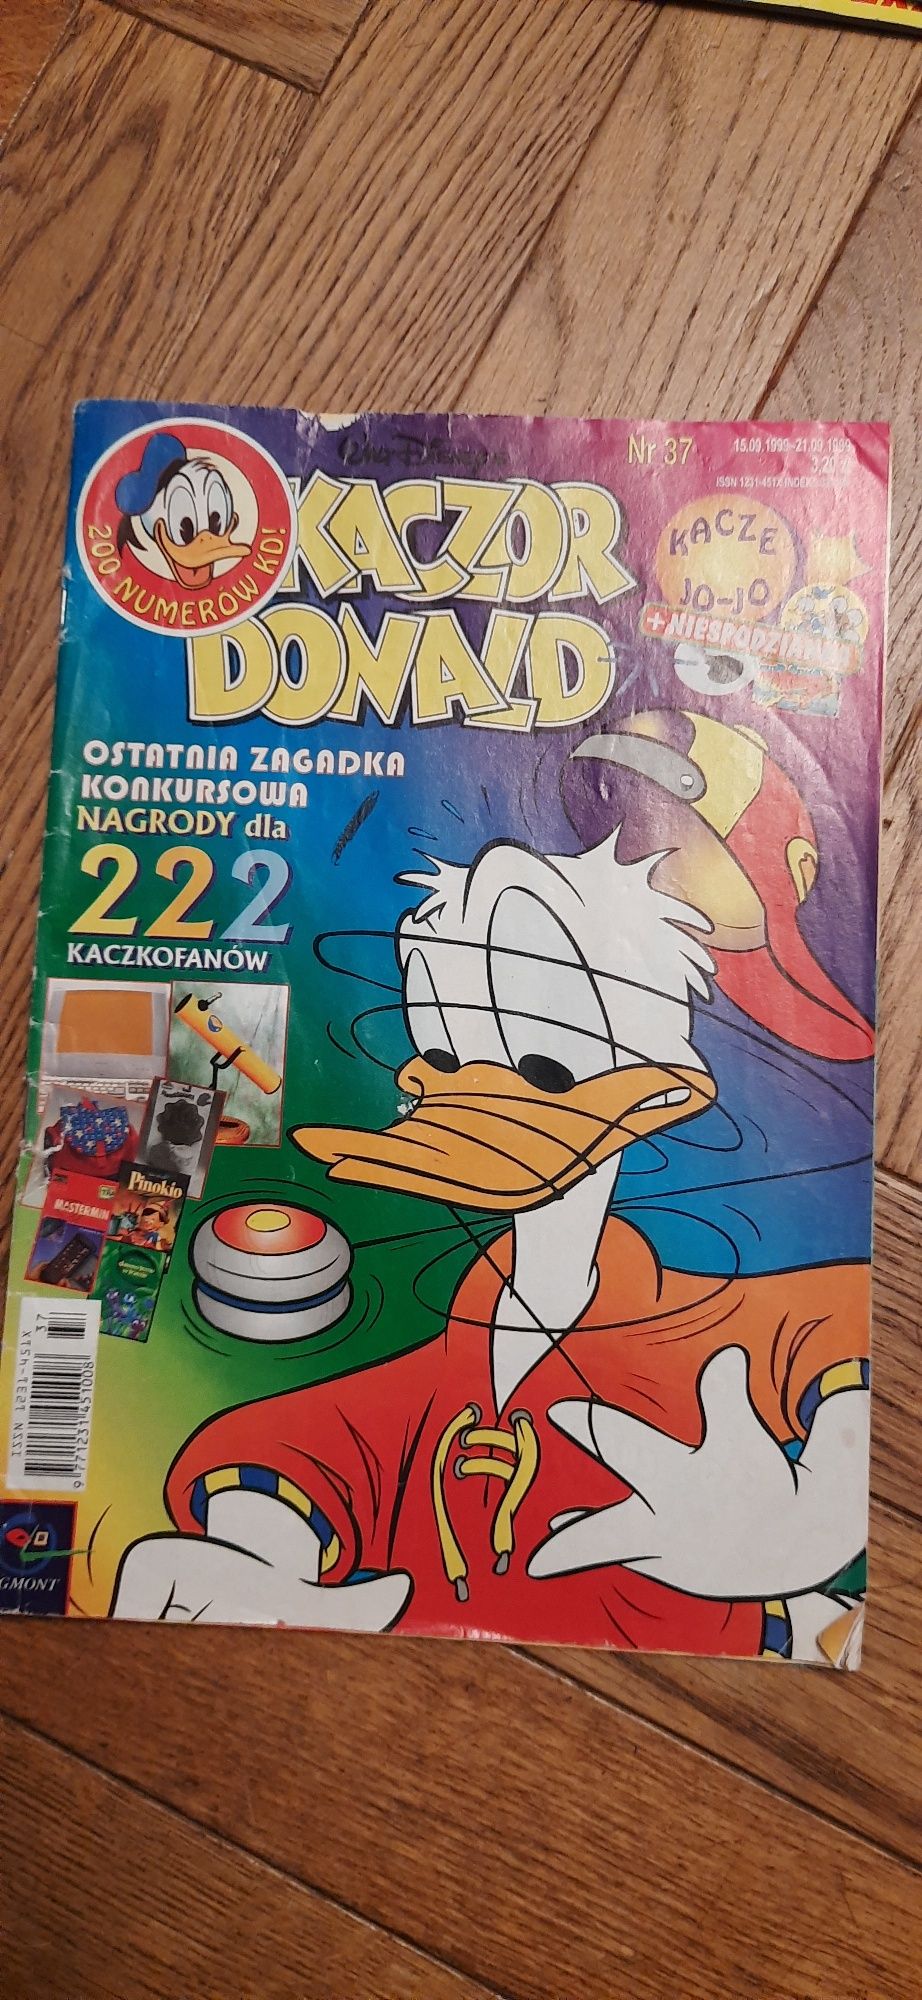 Komiks Kaczor Donald nr 37 1999 rok